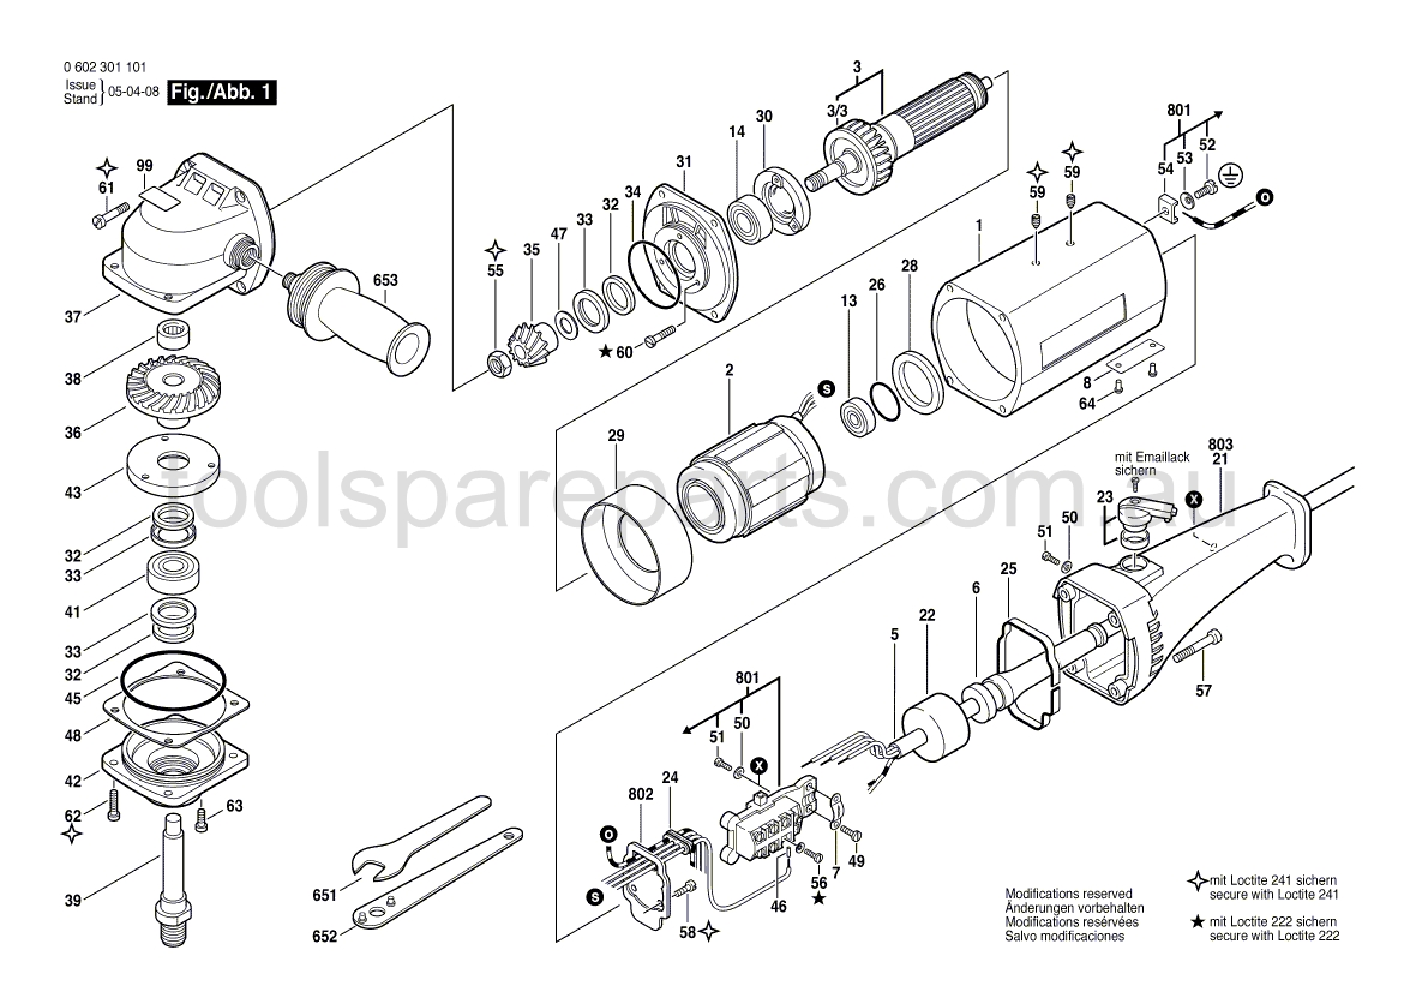 Bosch ---- 0602301101  Diagram 1